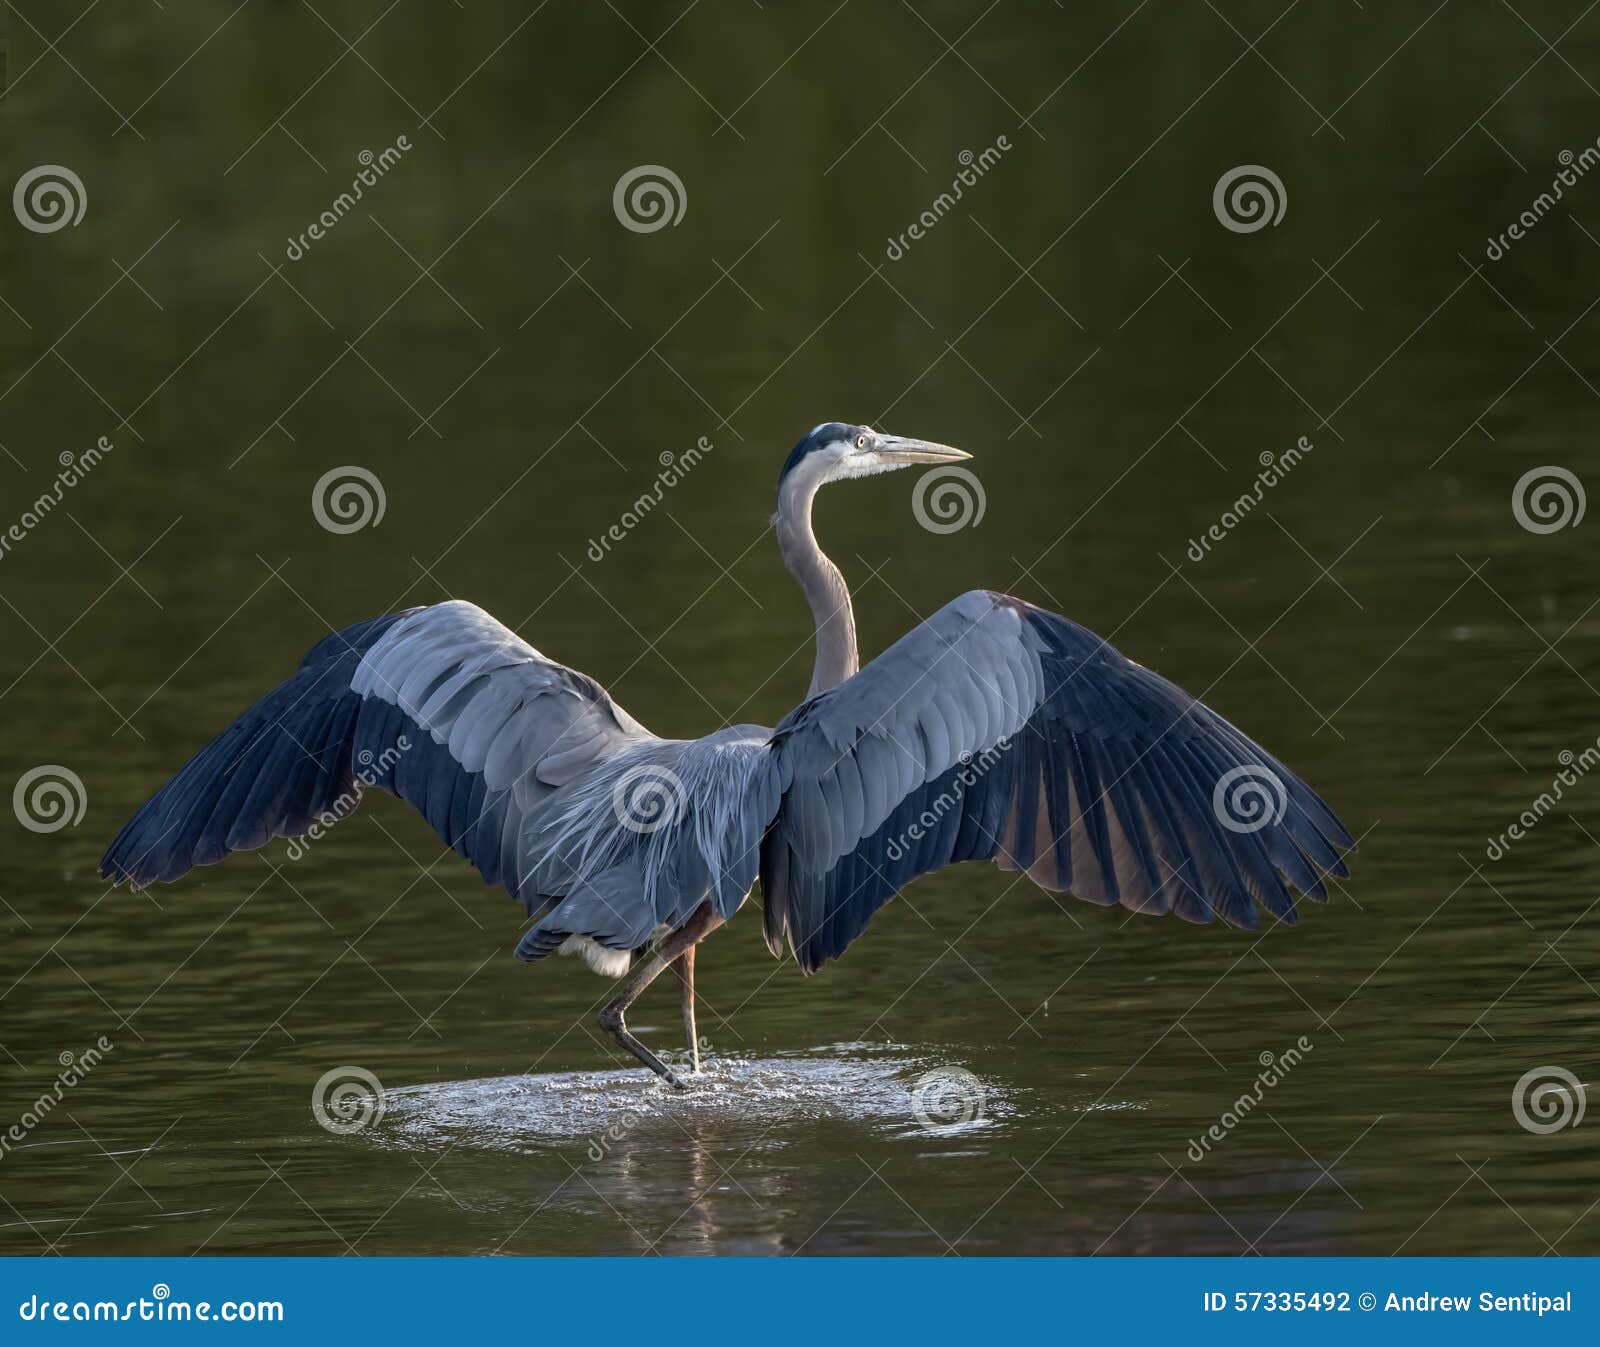 great blue heron walking with wings open